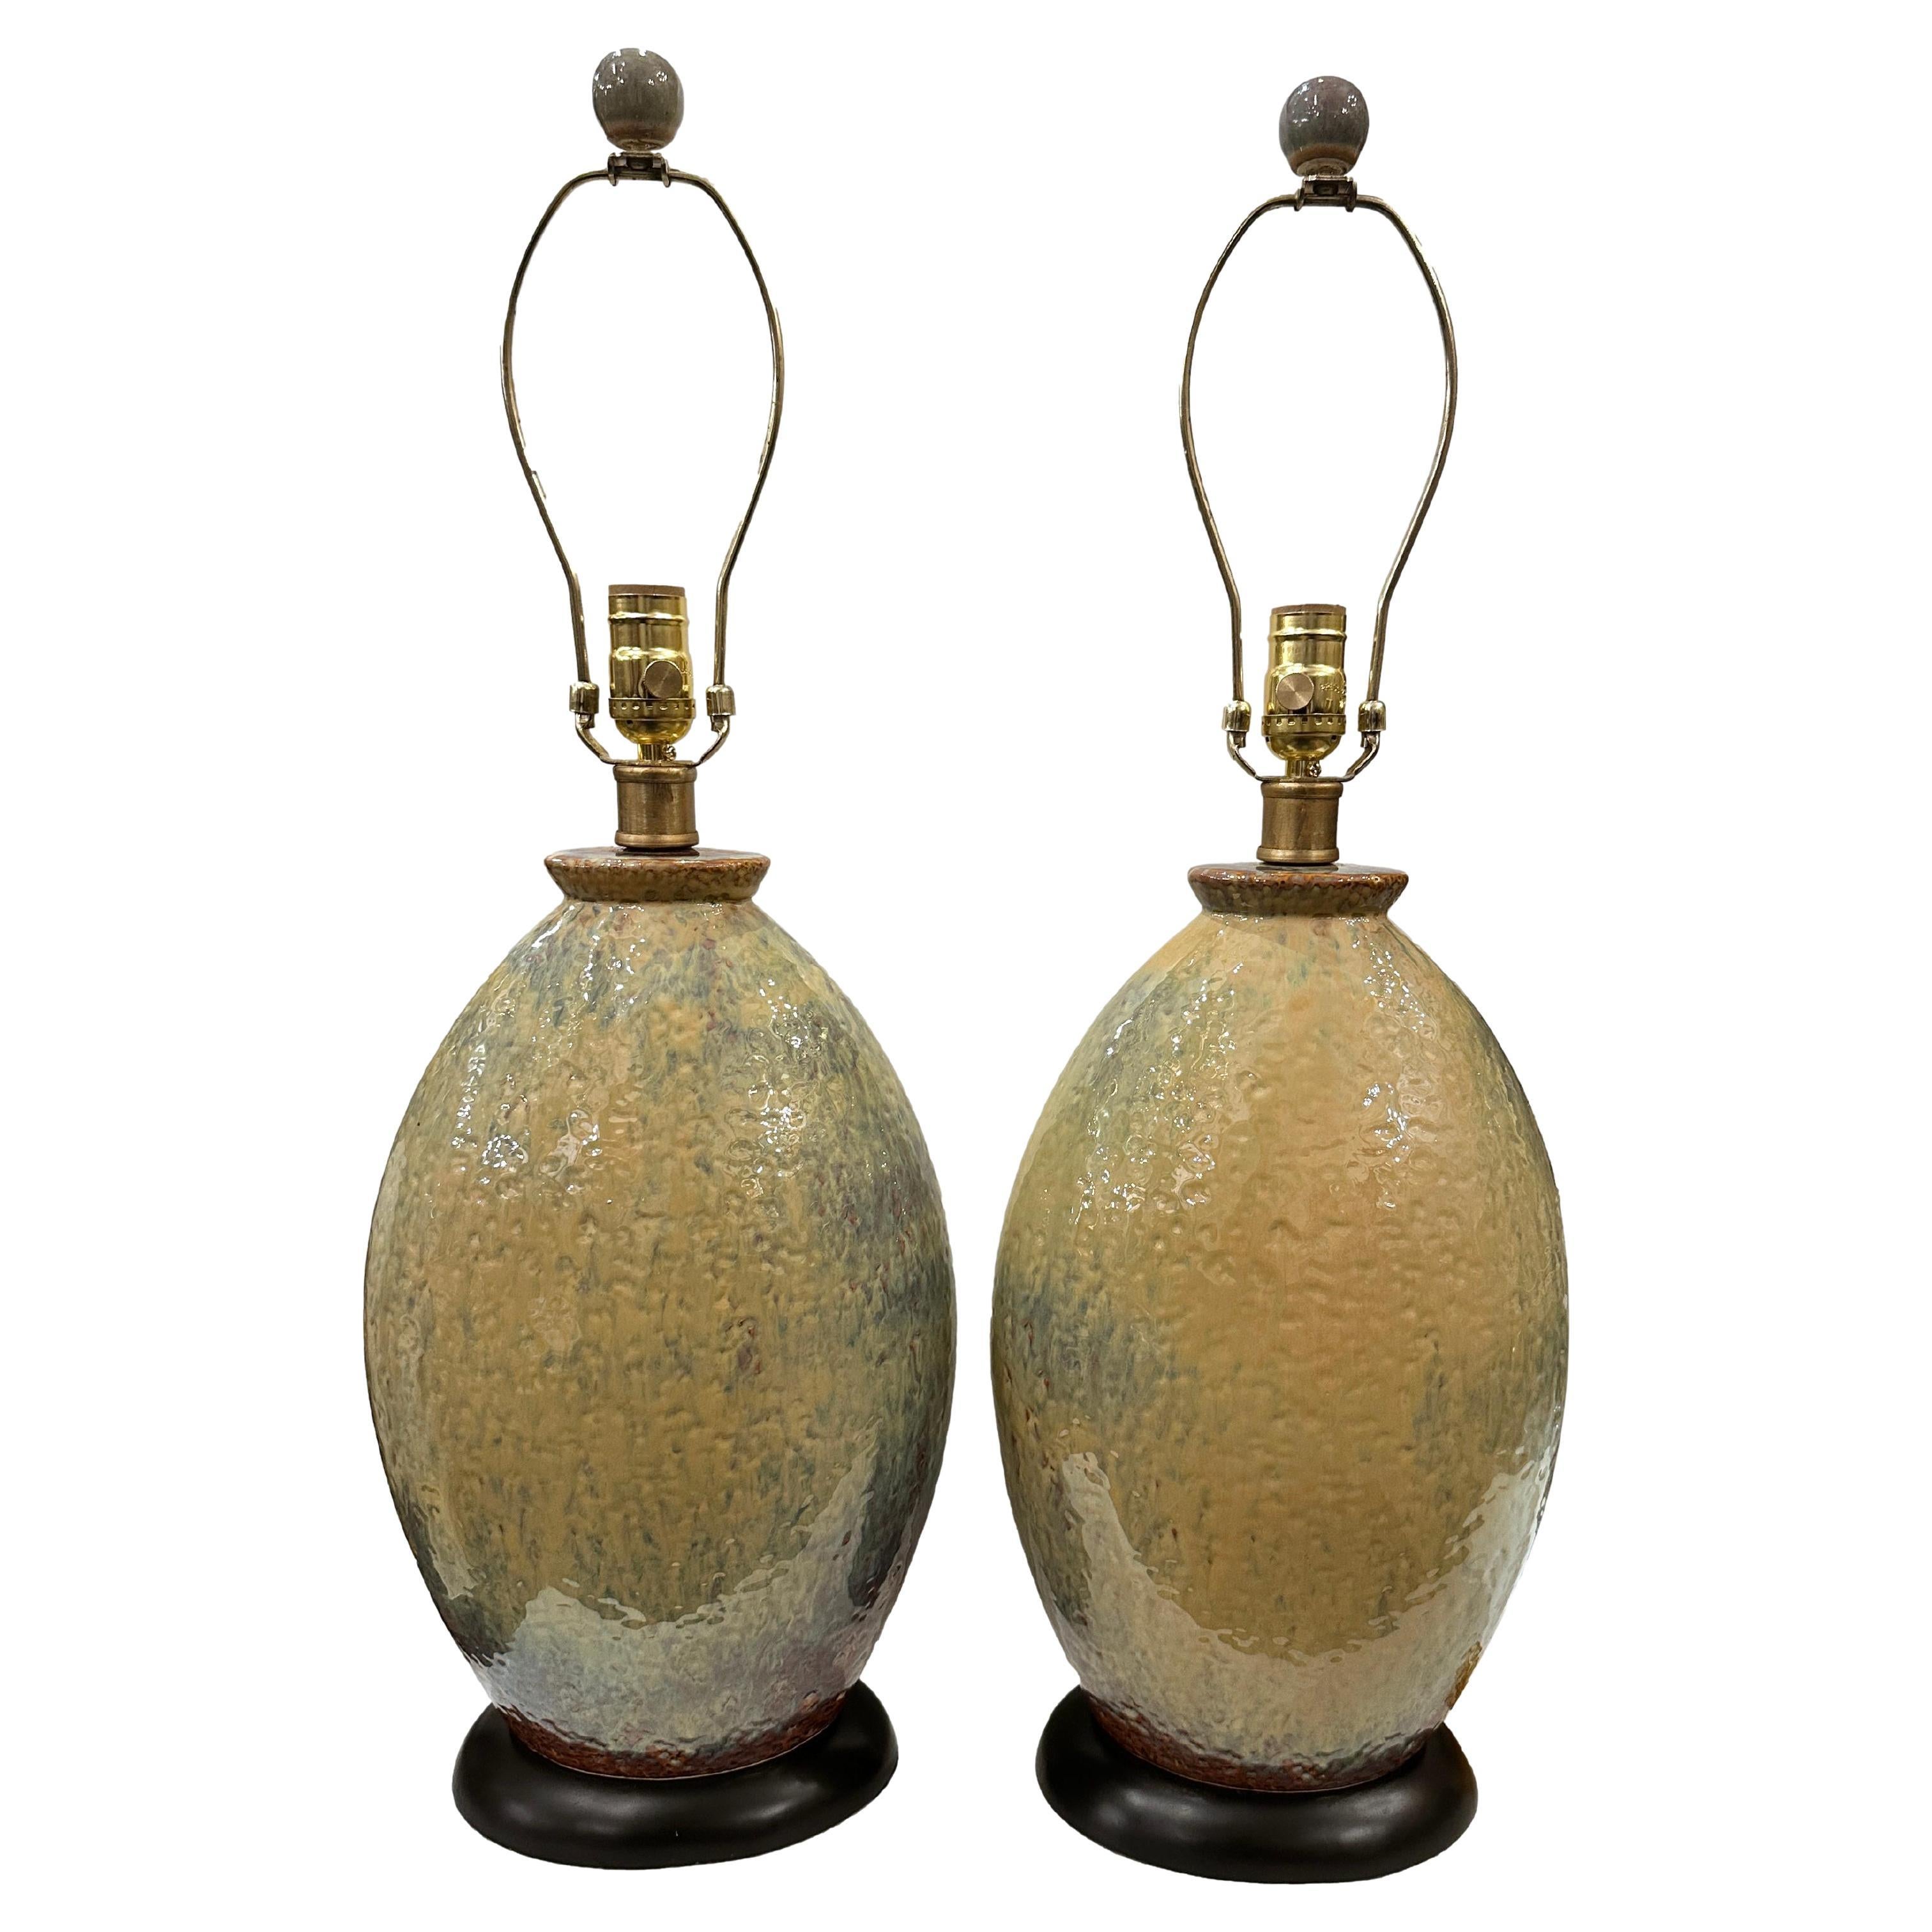 Pair of Midcentury Porcelain Lamps